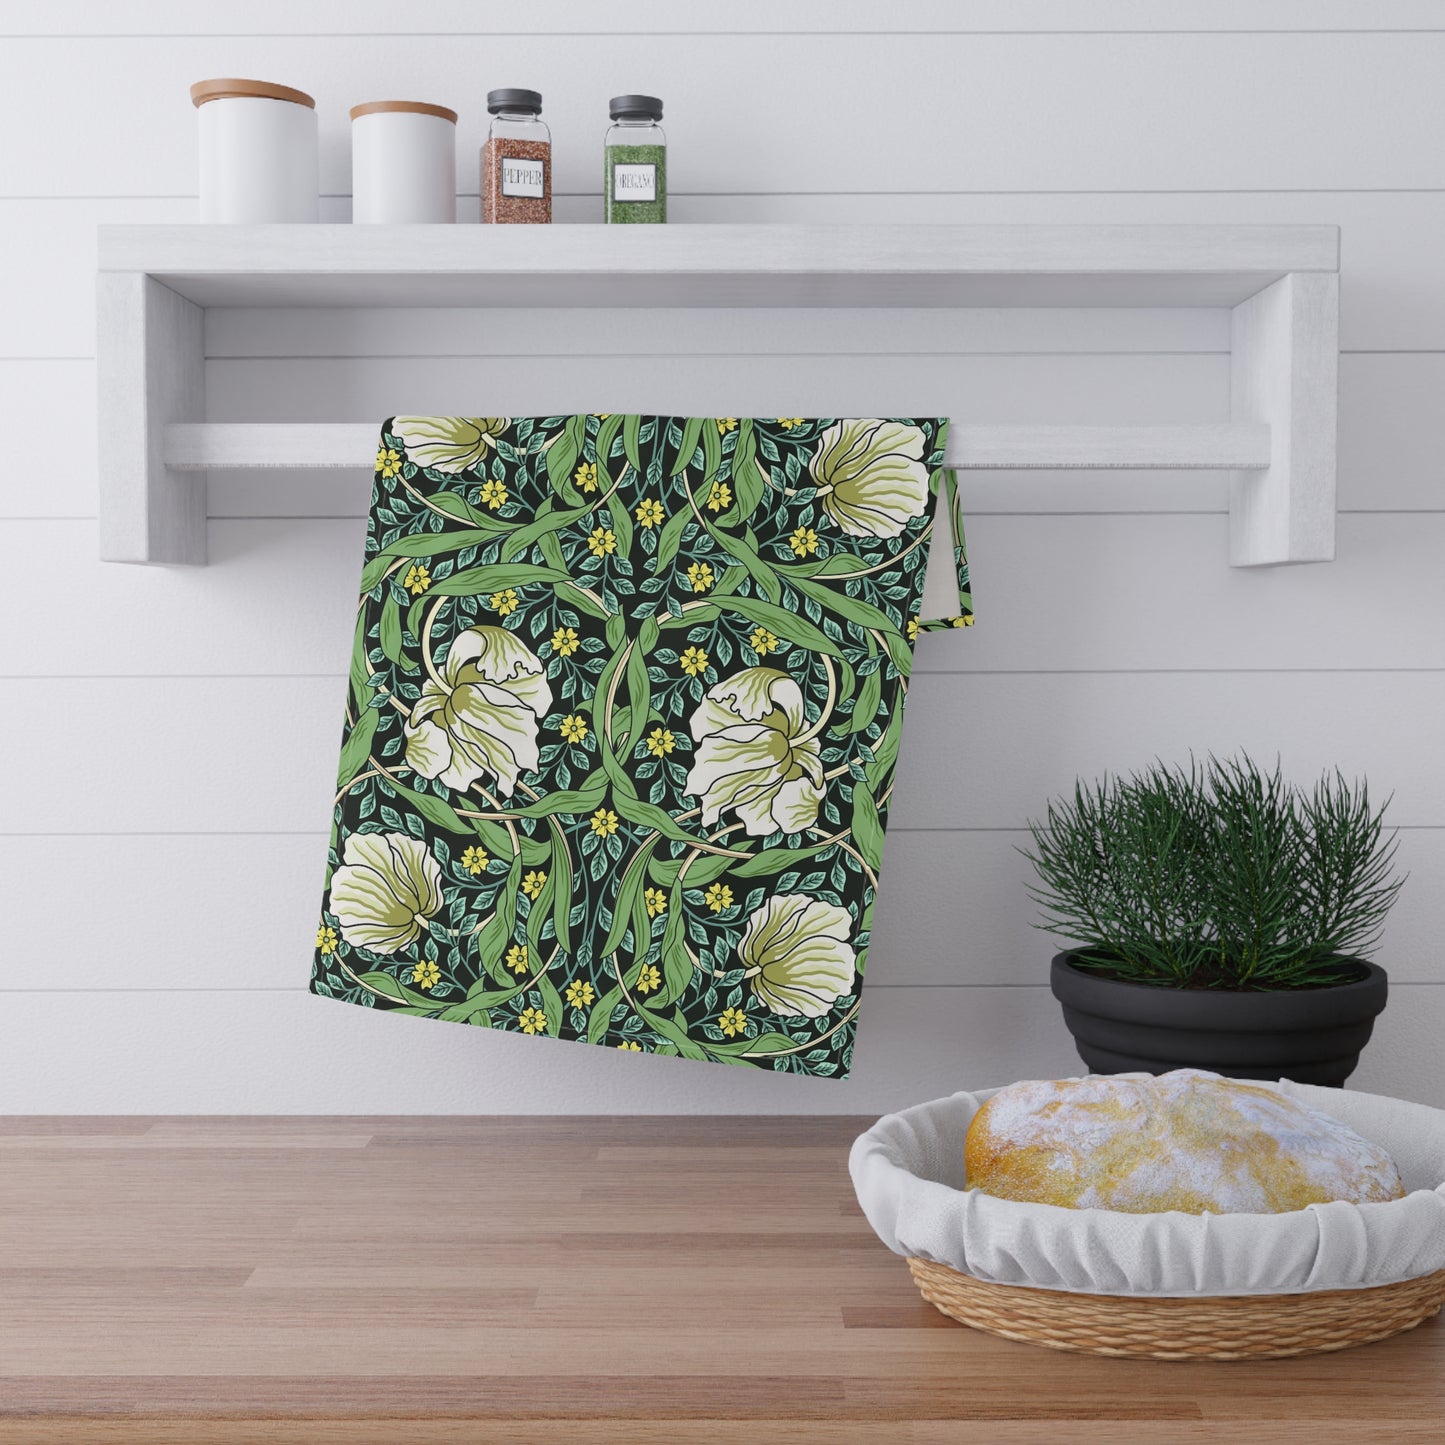 william-morris-co-kitchen-tea-towel-pimpernel-collection-green-7